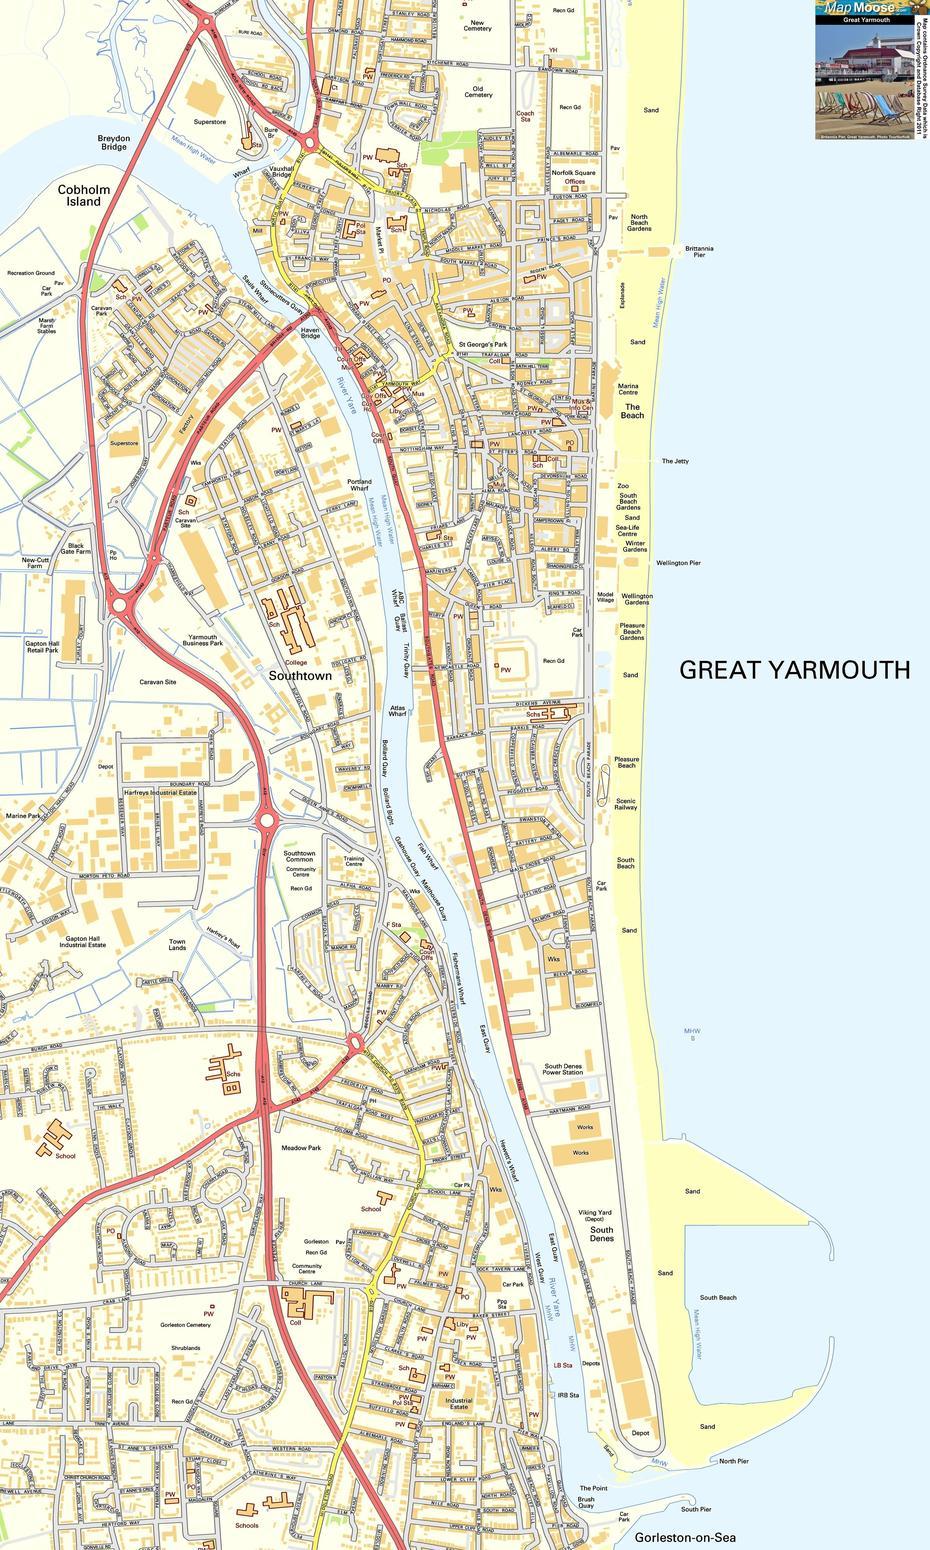 Great Yarmouth Norfolk England, Great Yarmouth Uk, Marine Parade, Great Yarmouth, United Kingdom